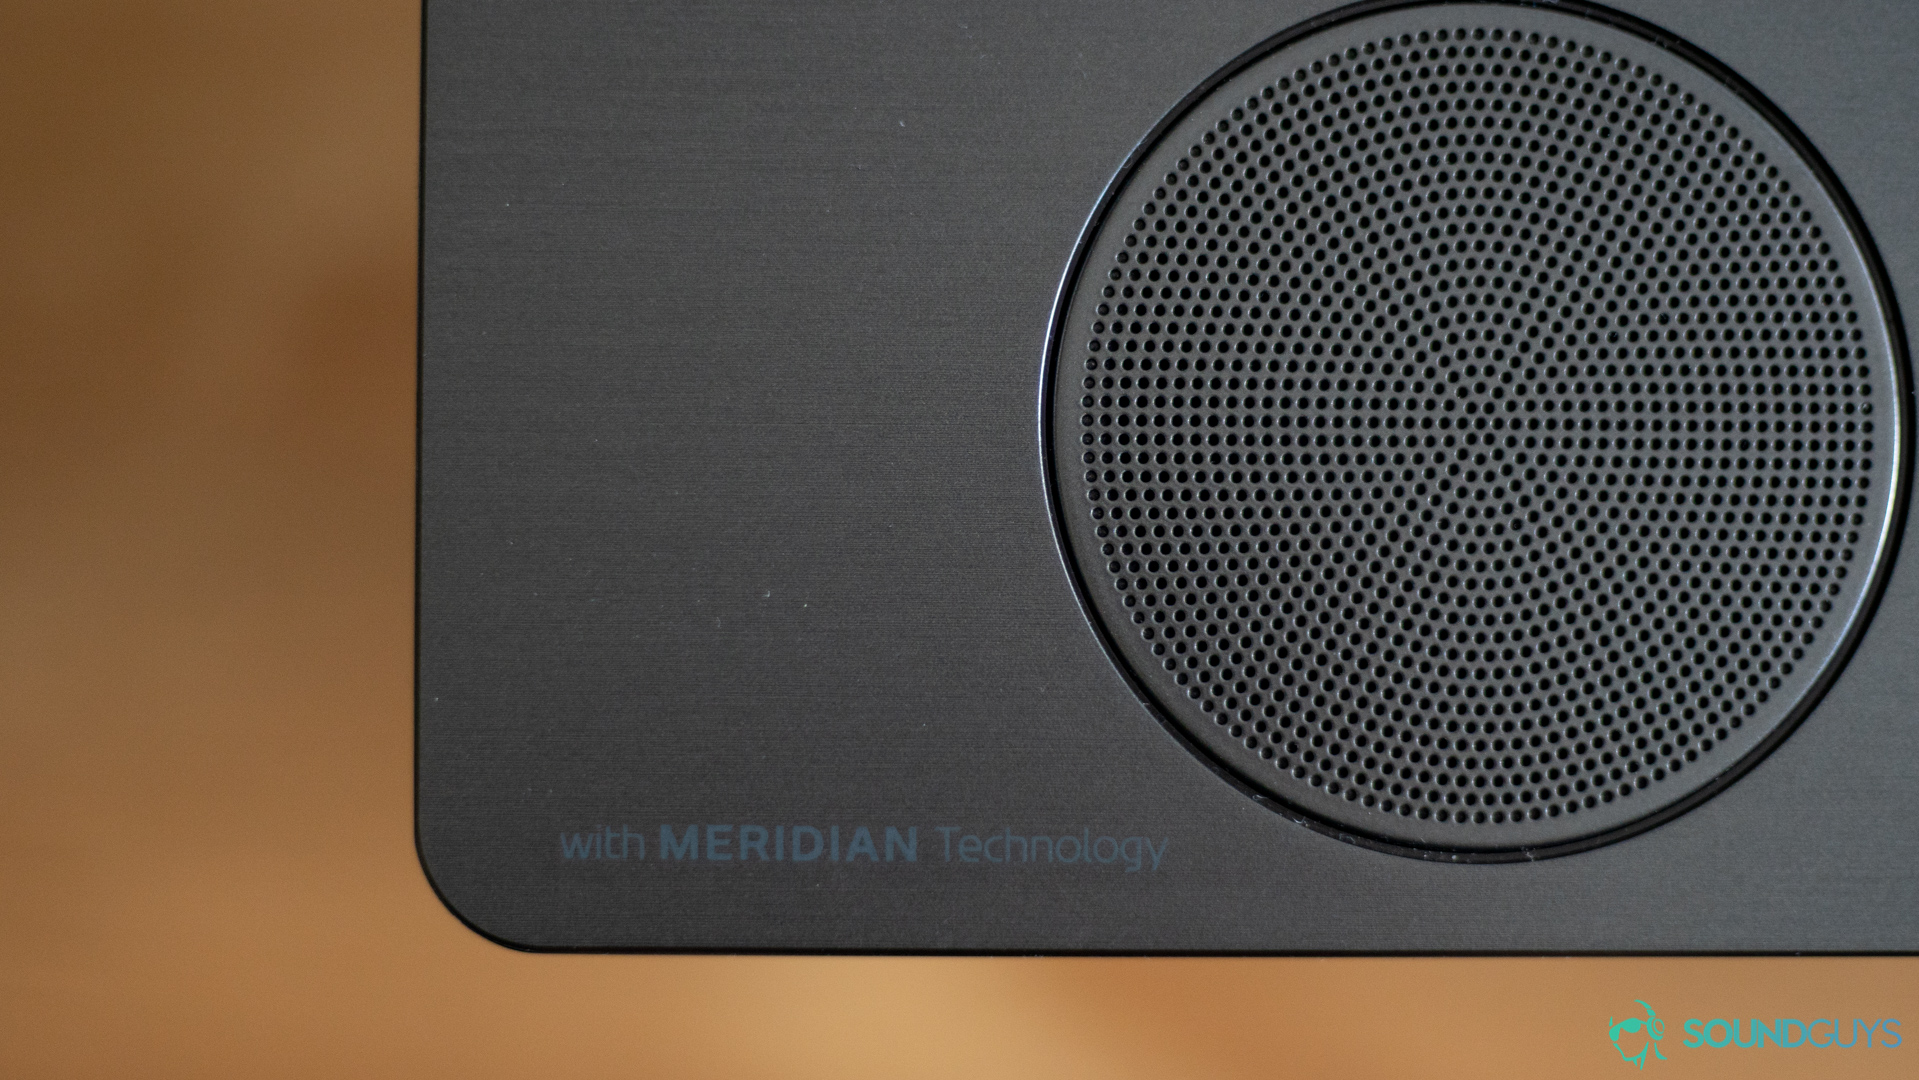 Best cheap soundbars: the Meridian Technology logo on the LG SK10Y